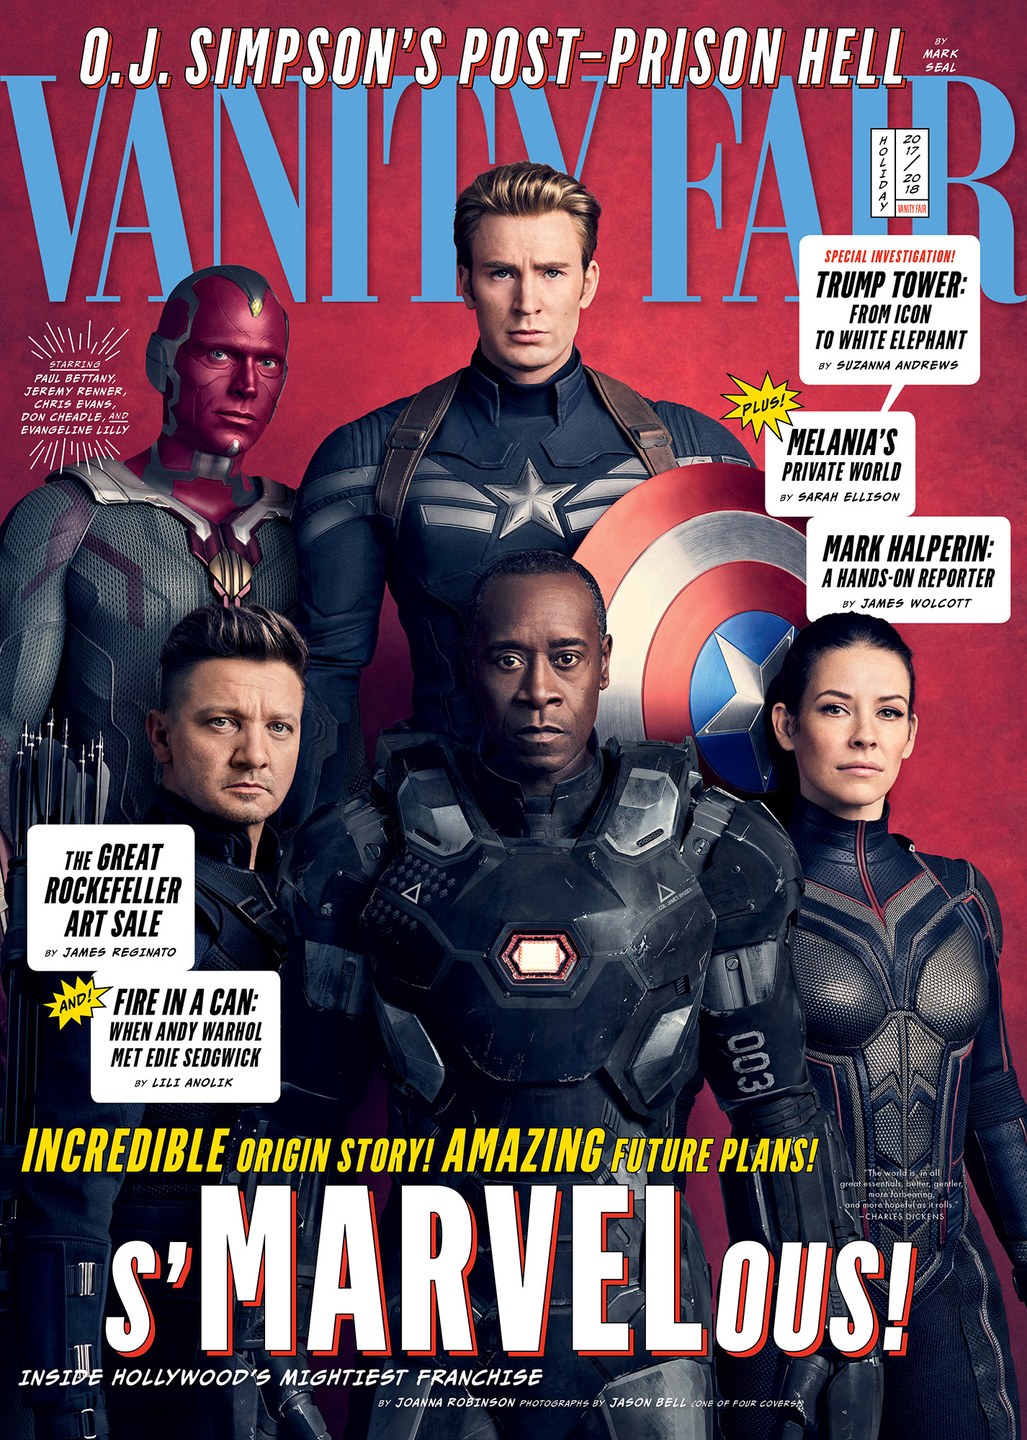 Akhirnya! Trailer Pertama 'Avengers: Infinity War' Dirilis